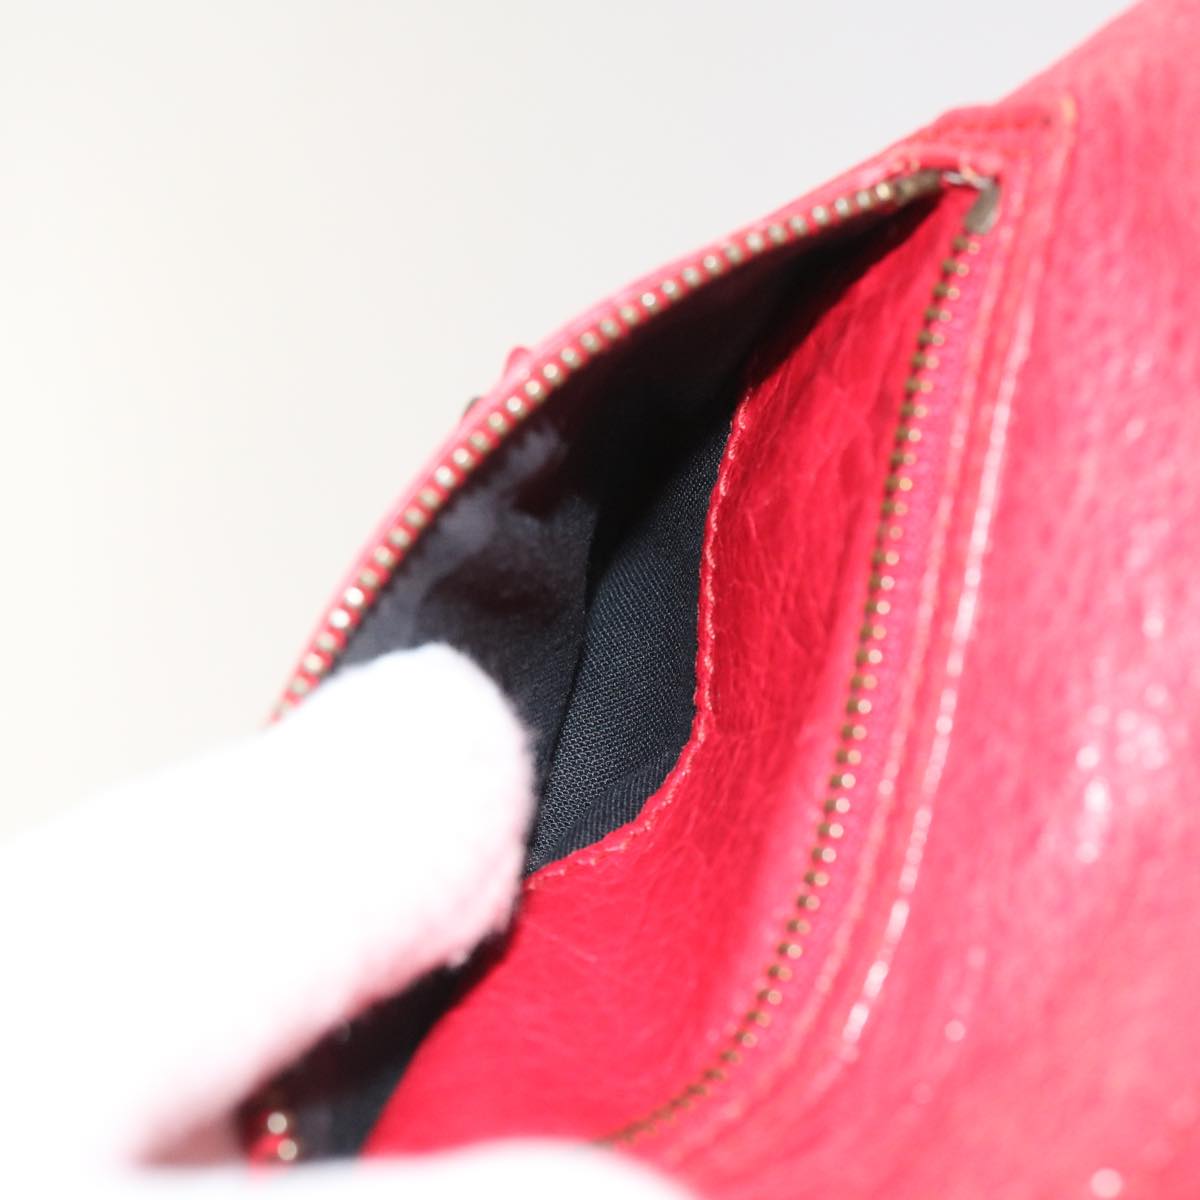 Balenciaga Shoulder Bag Leather Red 310250 Auth Ki3496